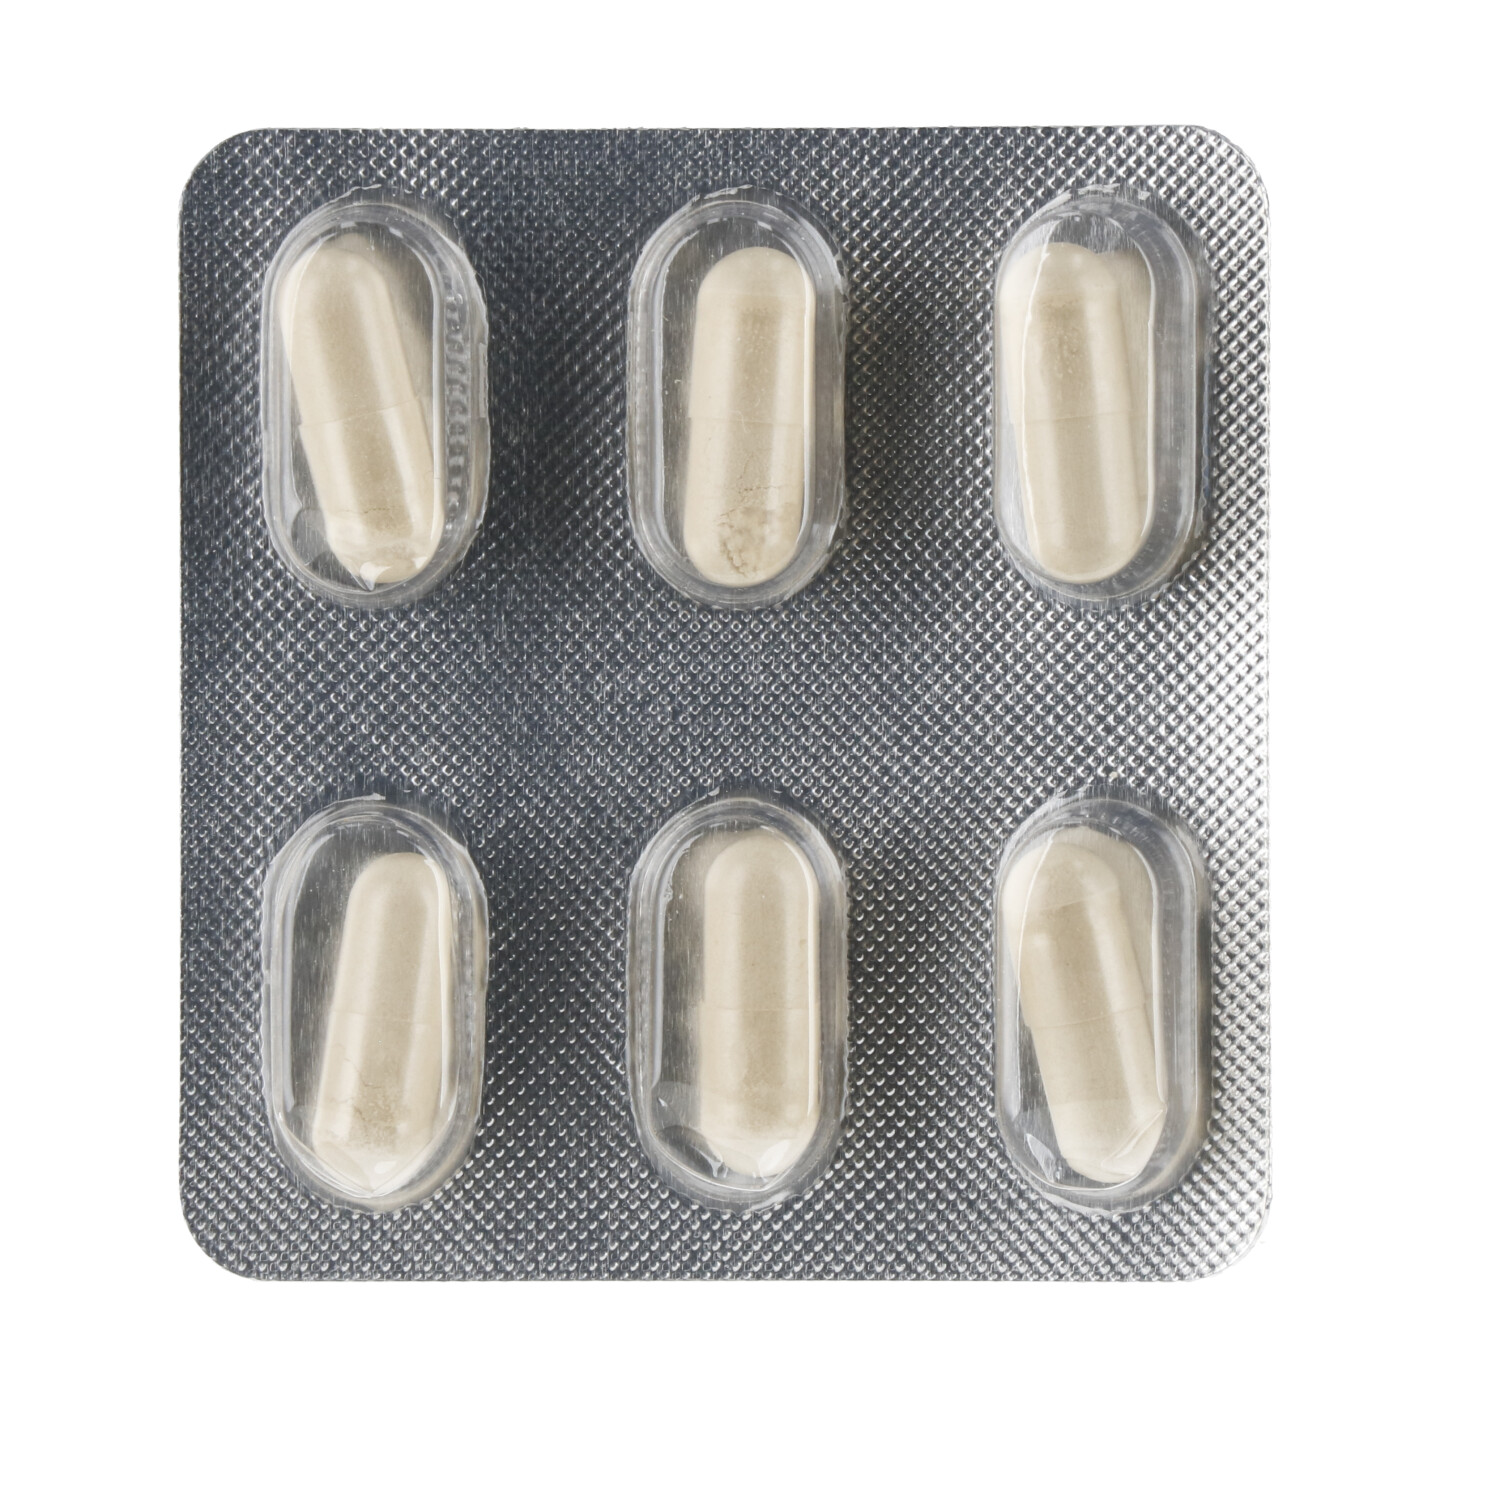 Servomyces® D50 Yeast Supplement 6 capsules